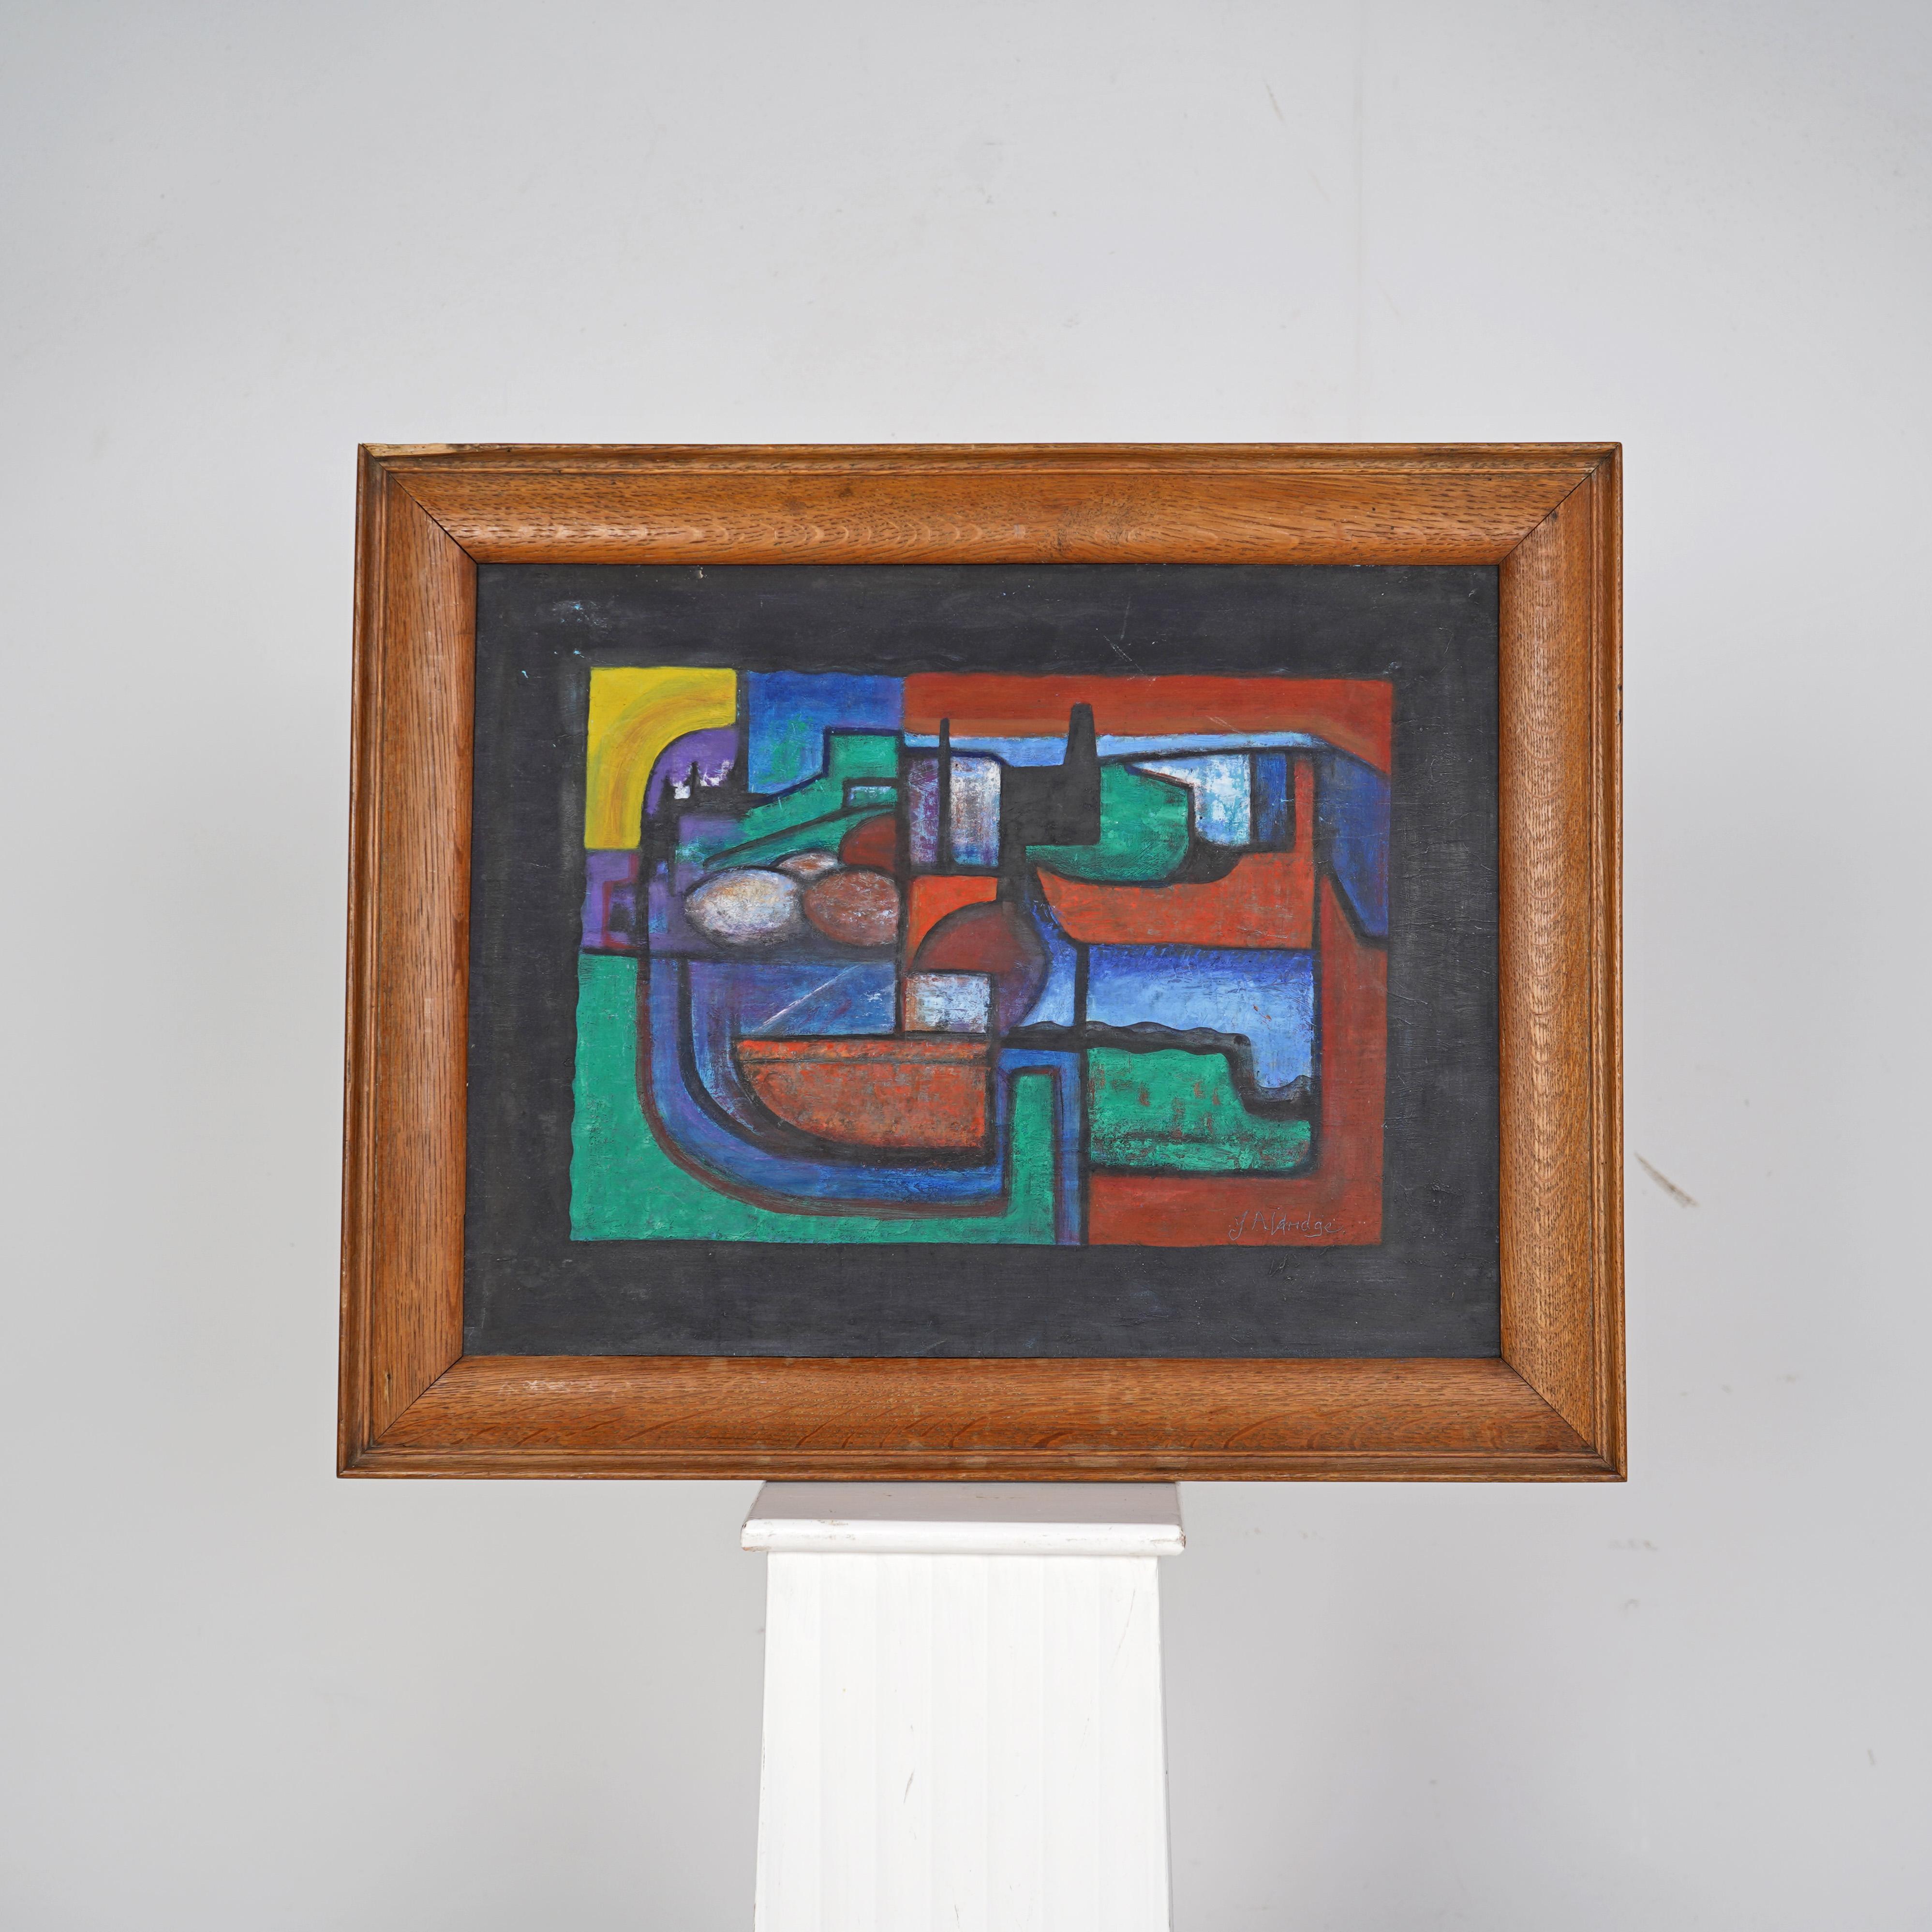 Post-Modern J.Alderidge Oil On Board Painting - Cubist Modernist Abstract  For Sale